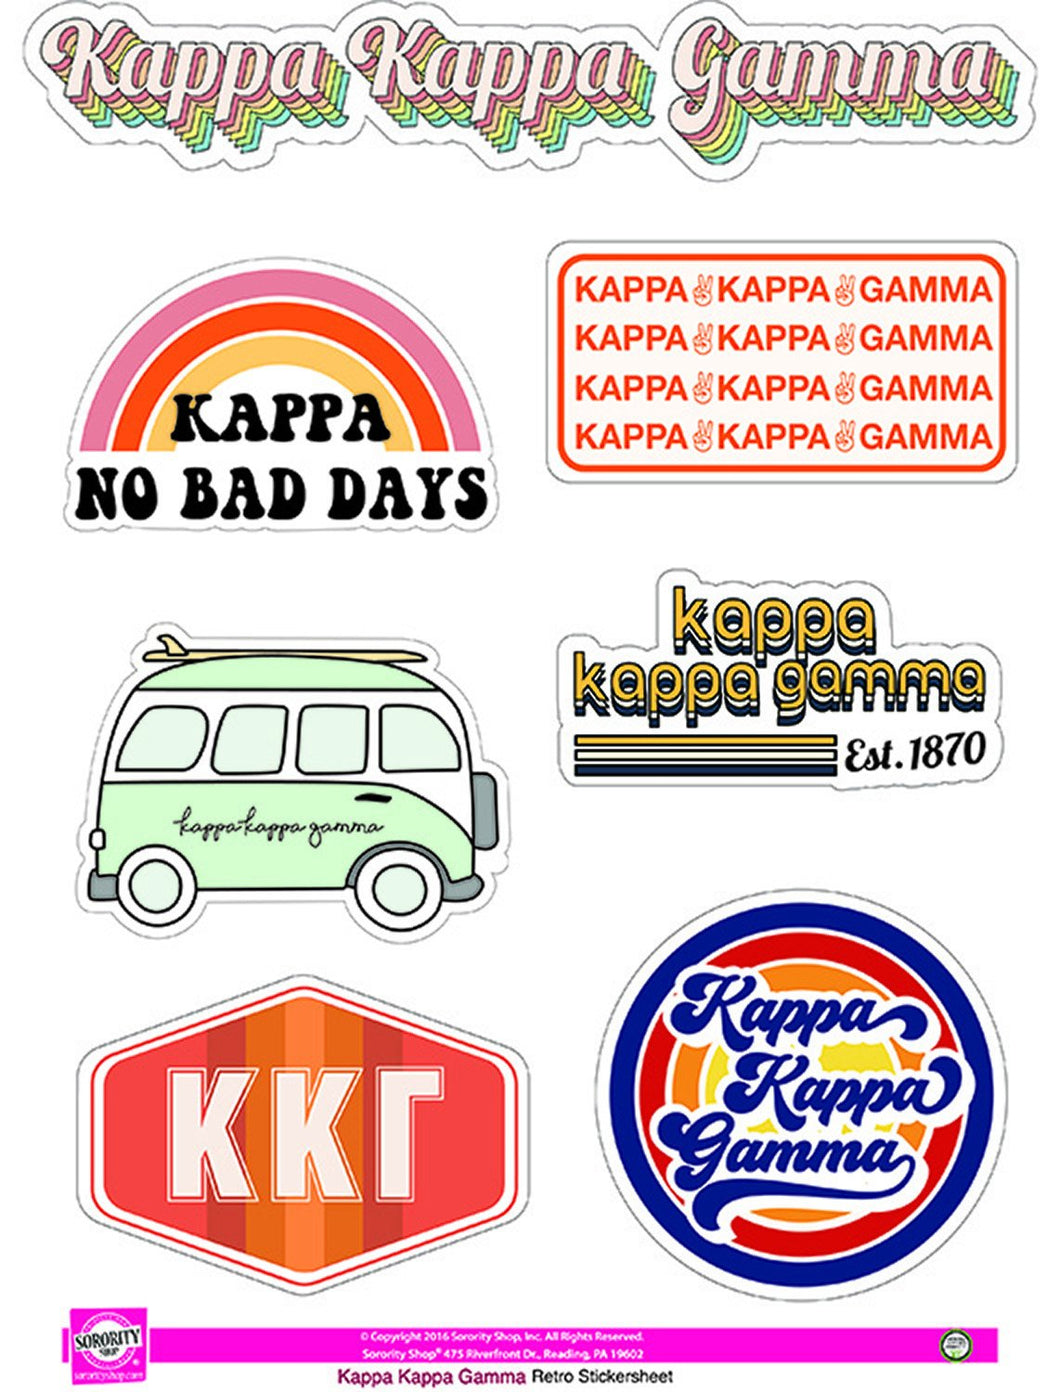 Retro Sticker Sheet - Kappa Kappa Gamma